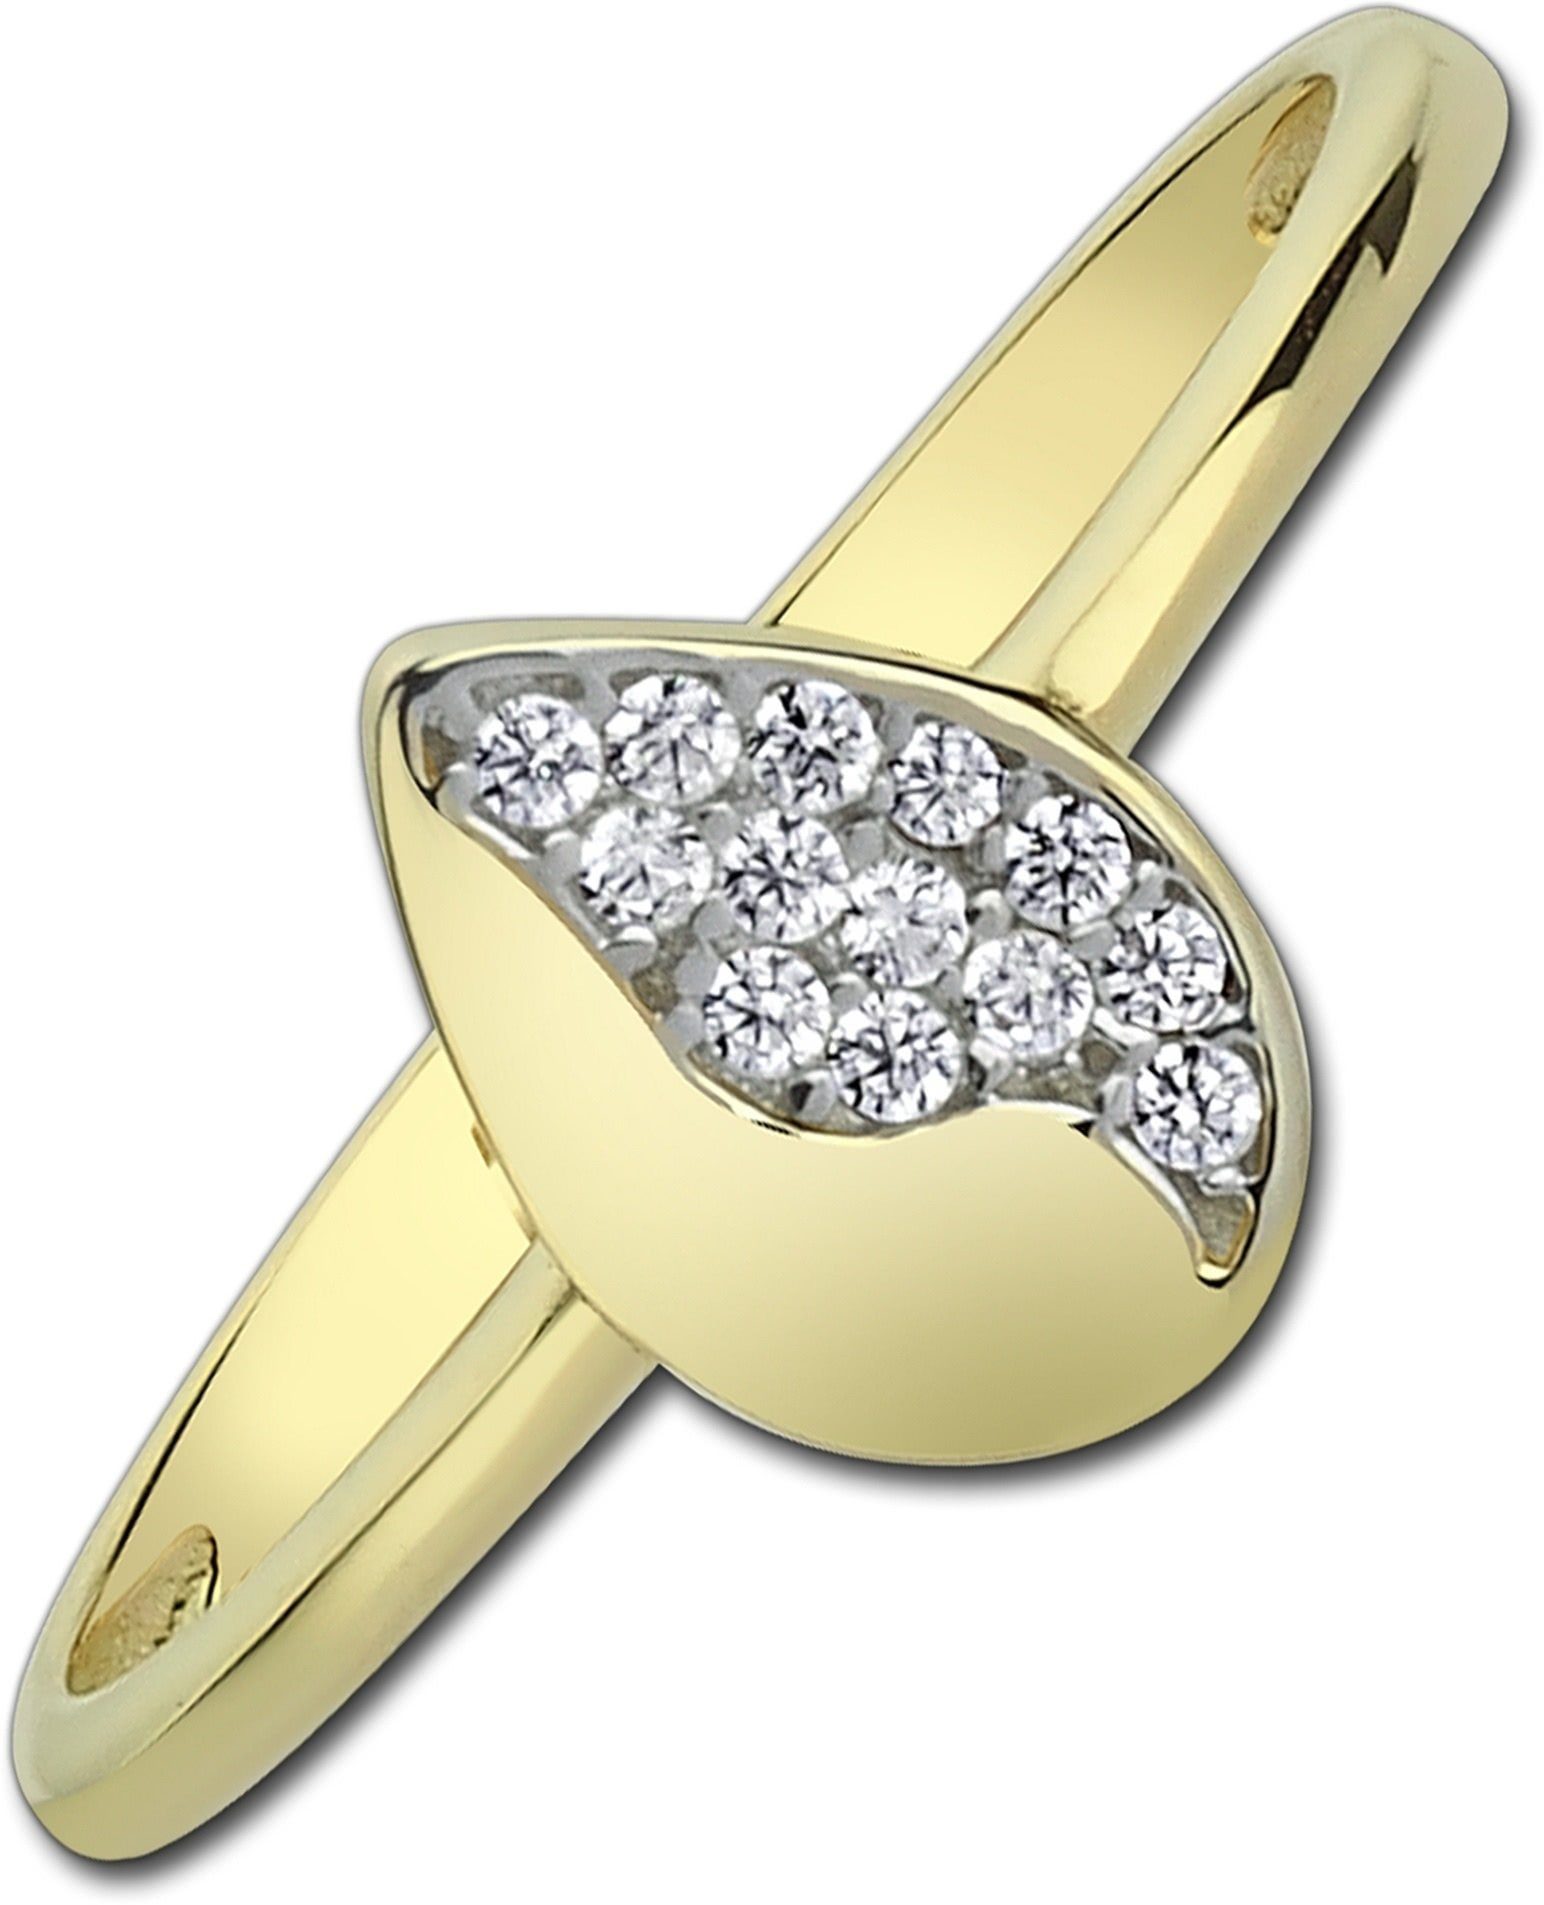 Balia Goldring Balia Damen Ring aus 333 Gelbgold (Fingerring), Fingerring Größe 56 (17,8), 333 Gelbgold - 8 Karat (Blatt gold) Gold 3